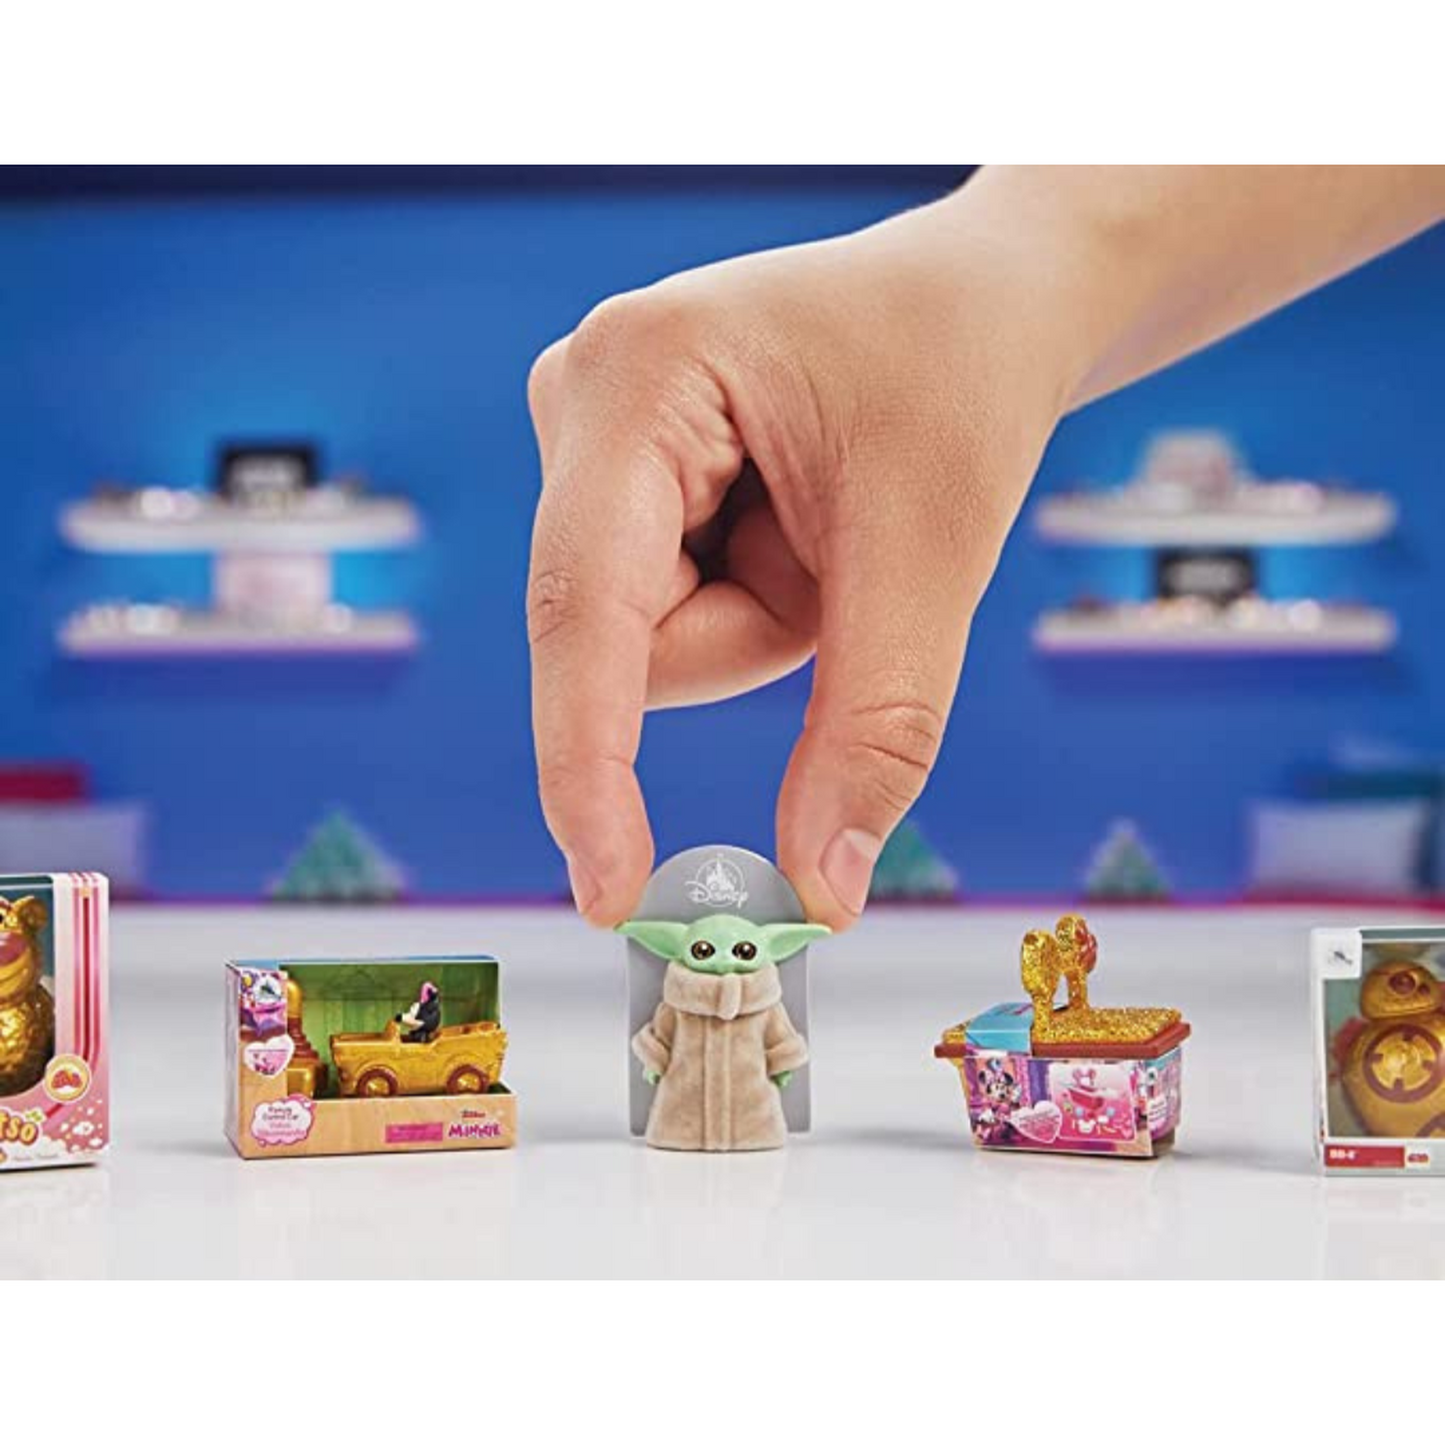 Toy Mini Brands Disney Store Edition Serie 2